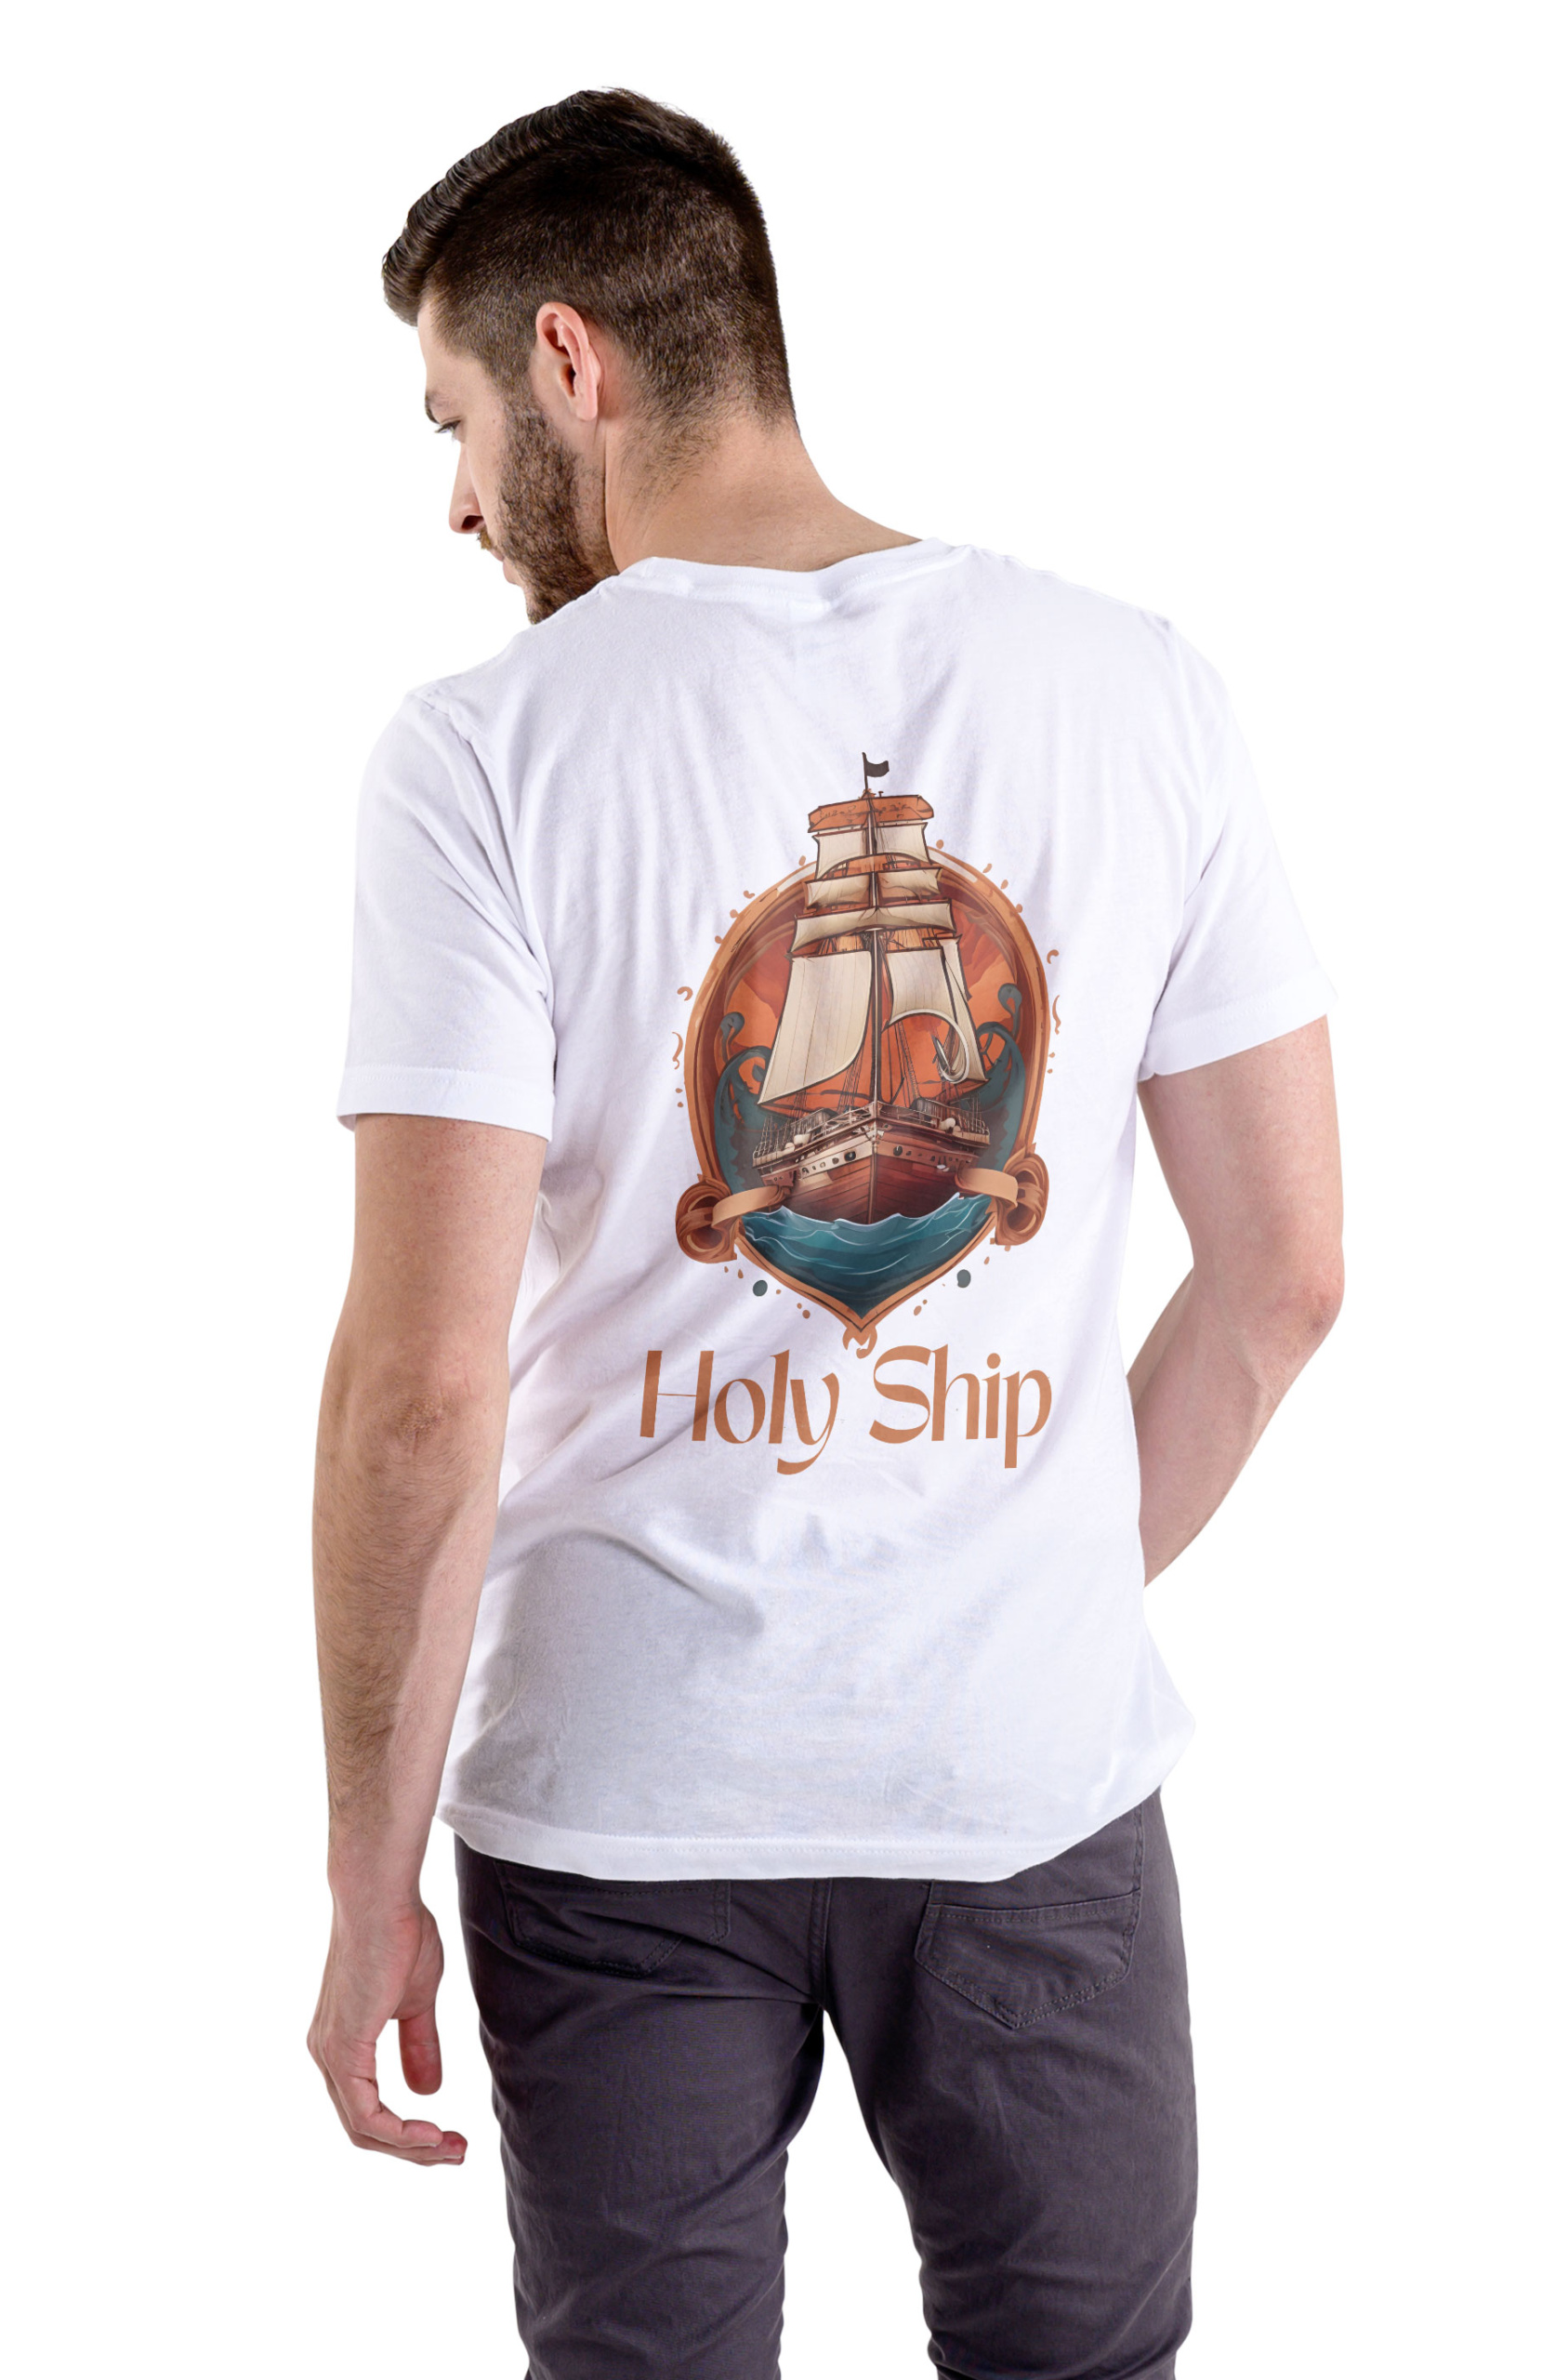 TShirt mit Holy Ship Logo weiss, Logo Holy Ship Shirt, Holy Ship, Clothing, Apparell, Holy Ship Shirts, Bekleidung Holy Ship, Tshirt Holy Ship, Clothing Store, Bekleidung Store, DJ Bekleidung, Trend Bekleidung, KI;